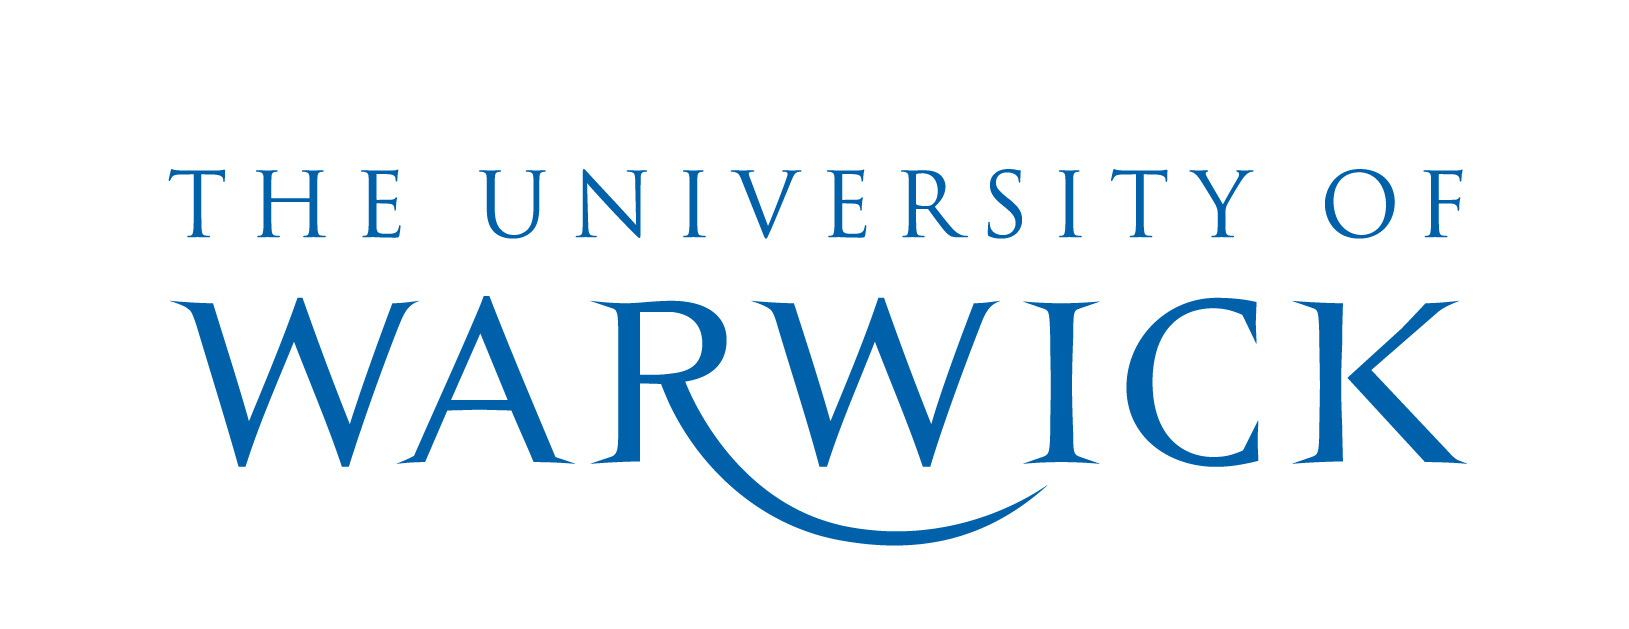 warwick logo